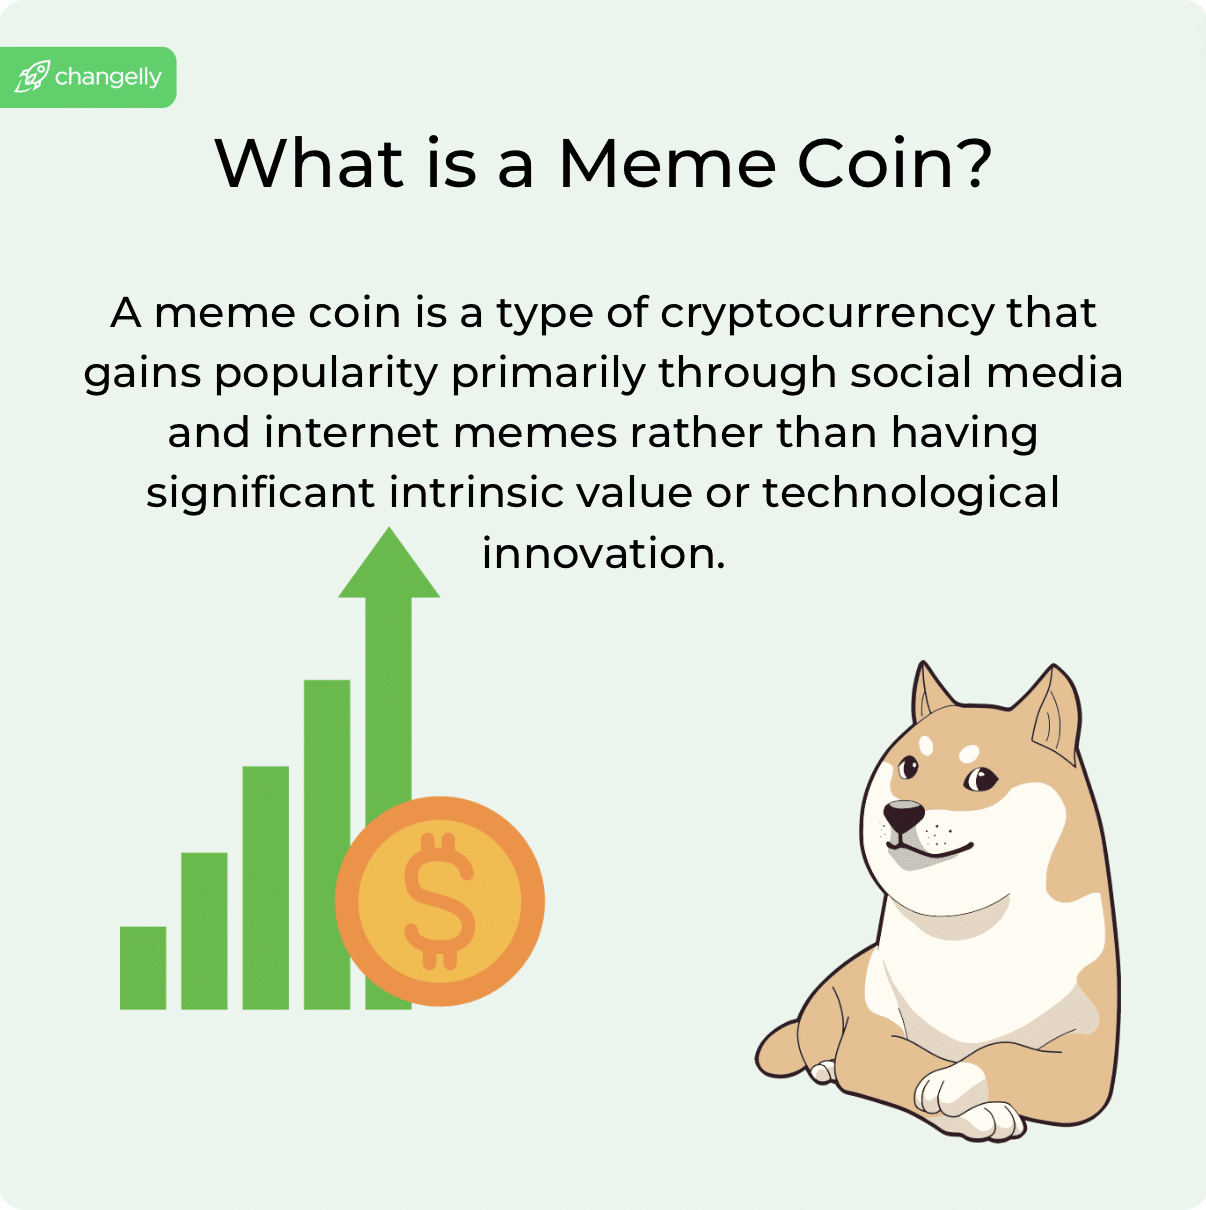 What is a meme coin?